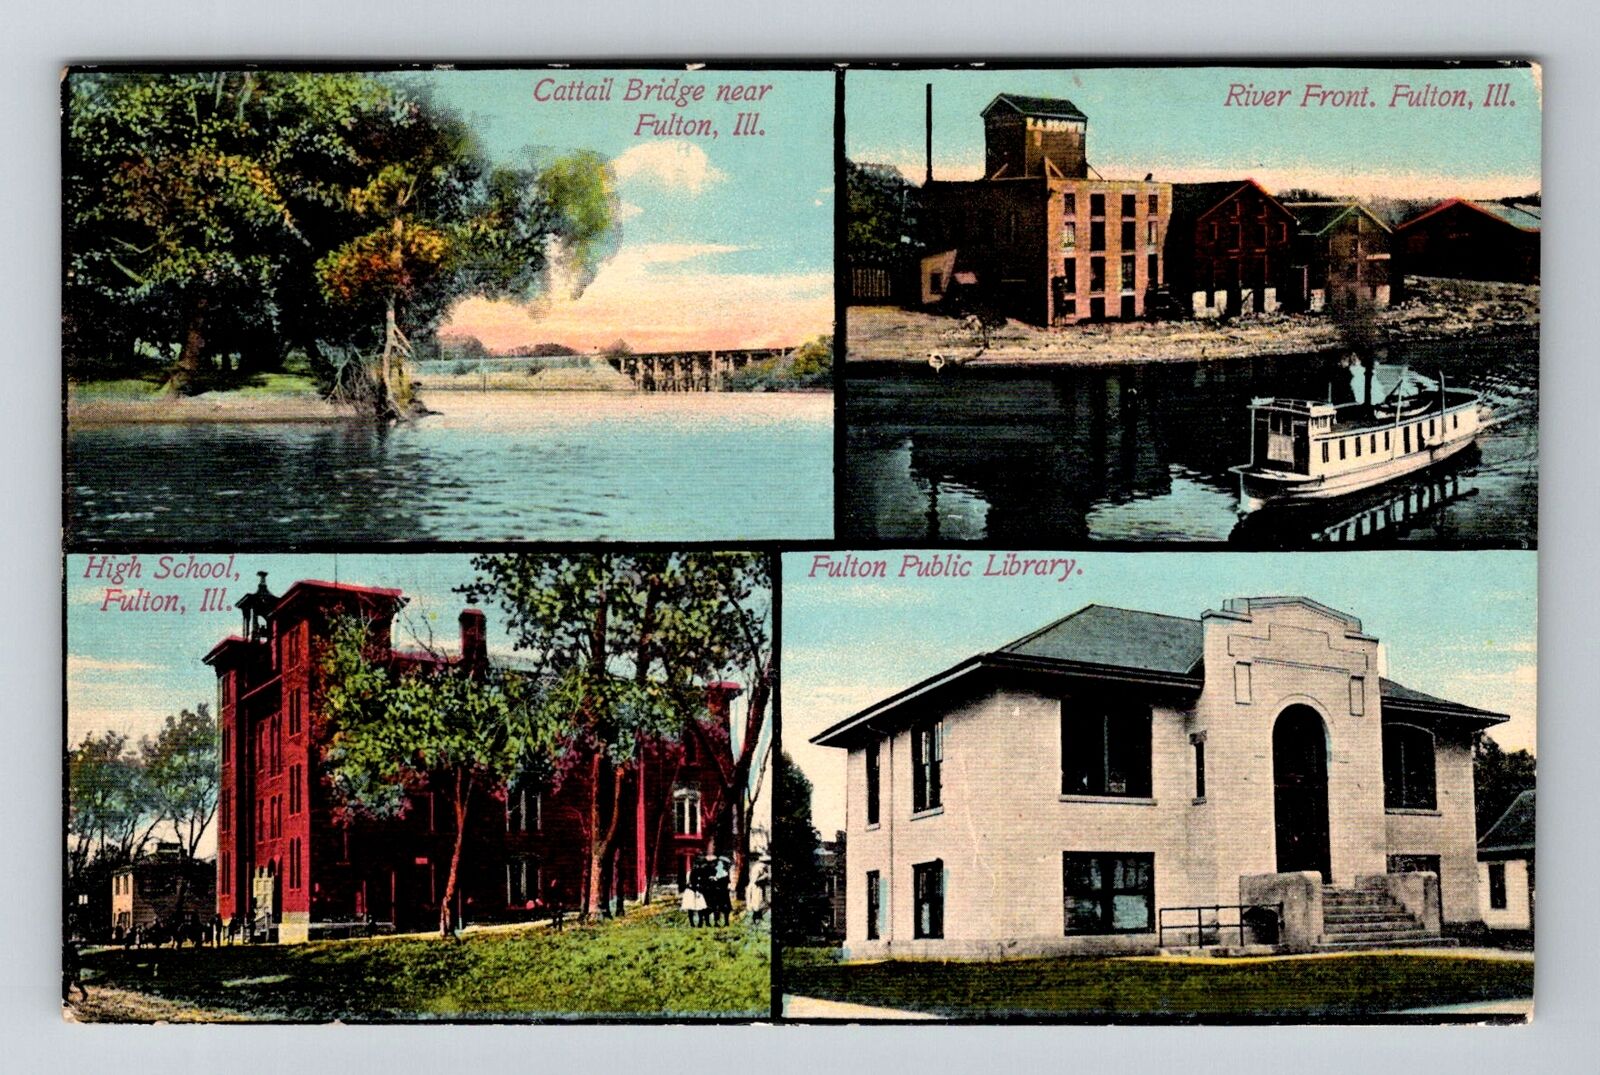 Fulton, IL-Illinois, Library, River Front, High School, c1910, Vintage Postcard